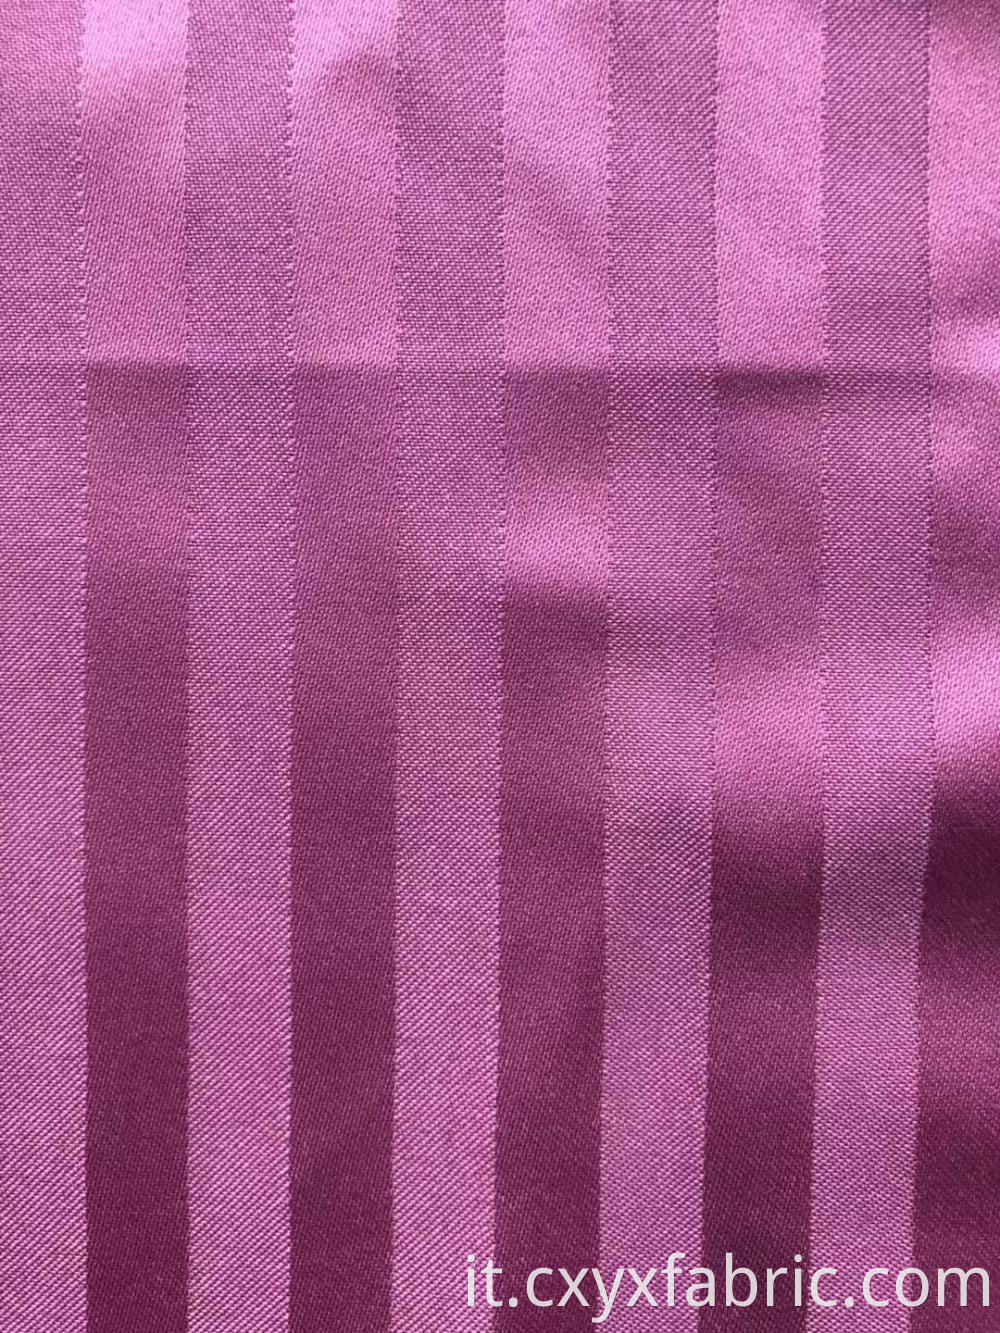 Polyester Taffeta Fabric